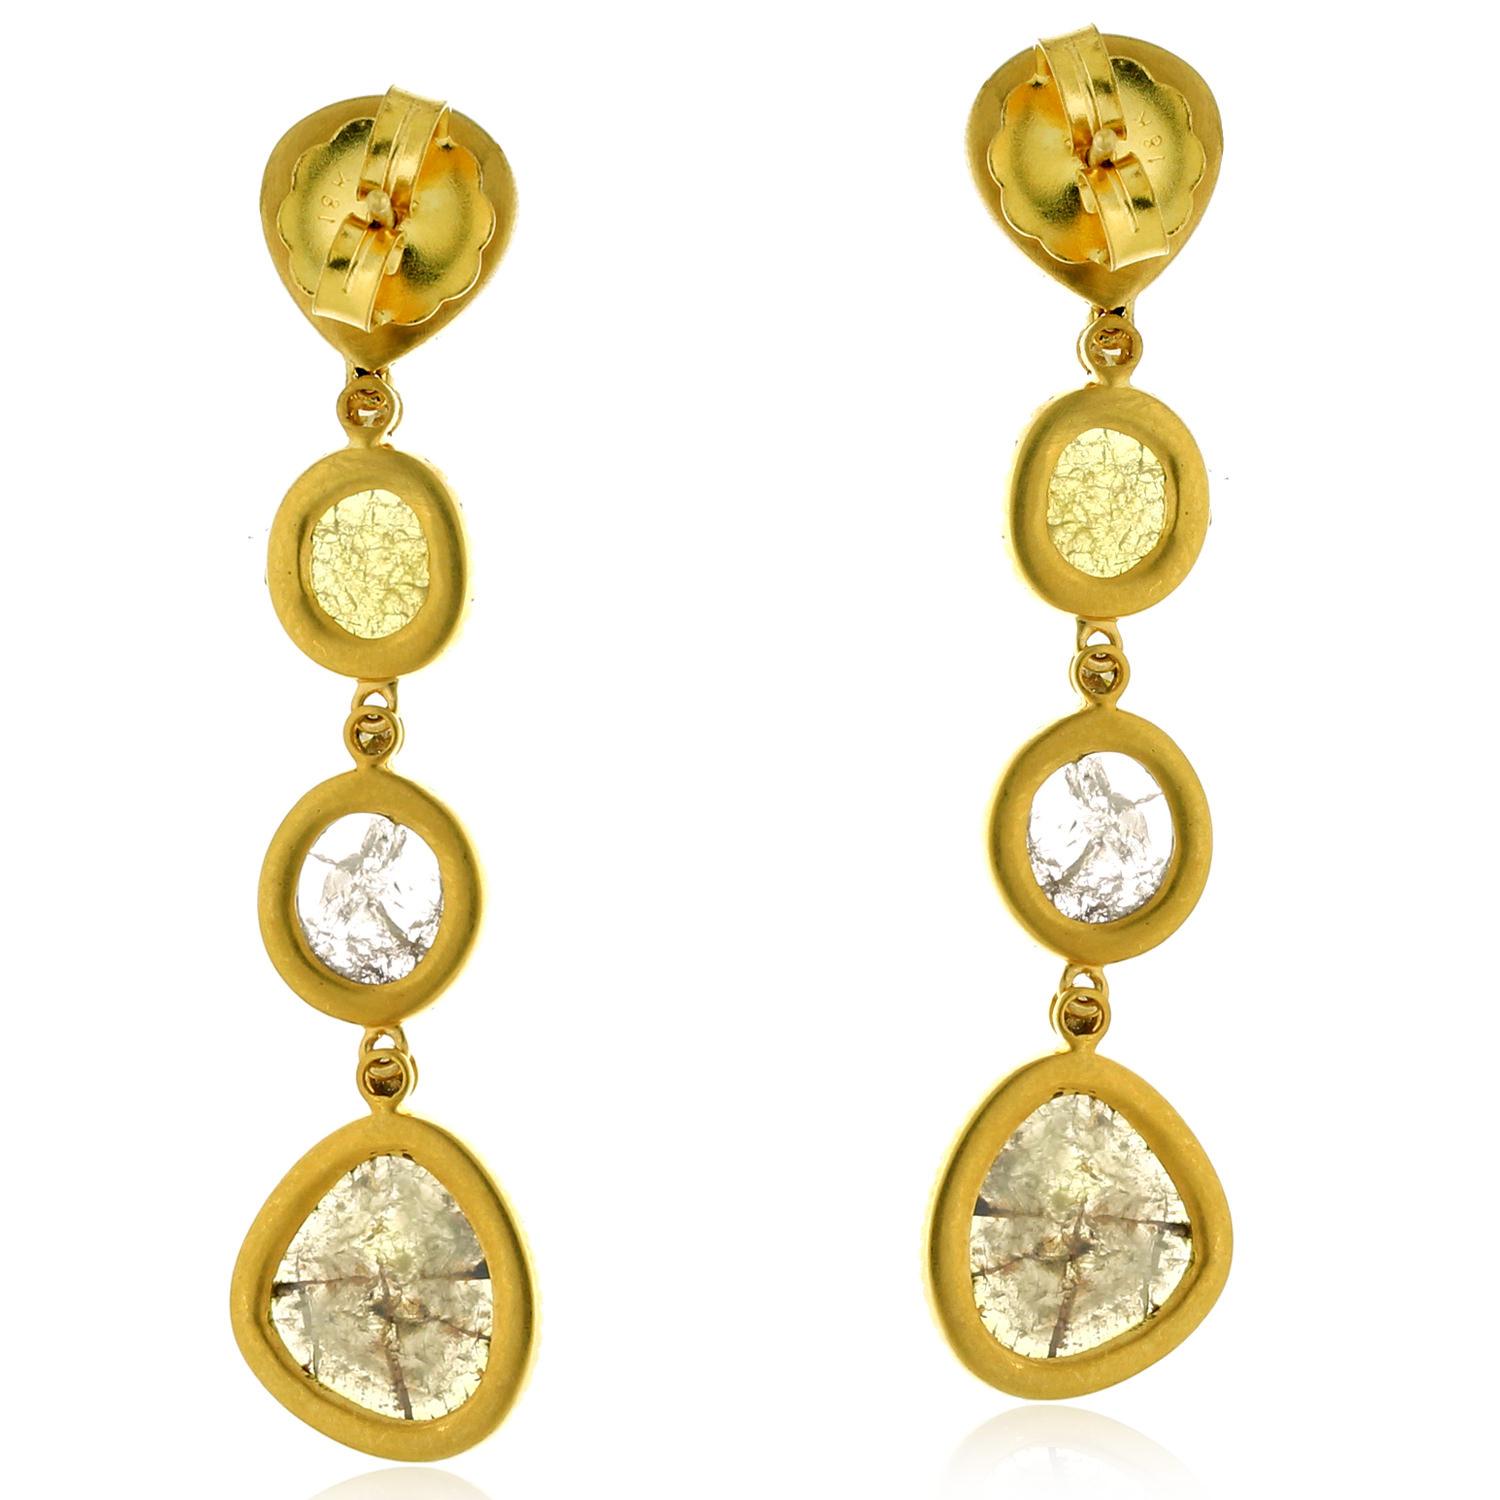 Uncut 4-Tier Multi Shaped Sliced Diamond Earring in 18k Yellow Gold For Sale